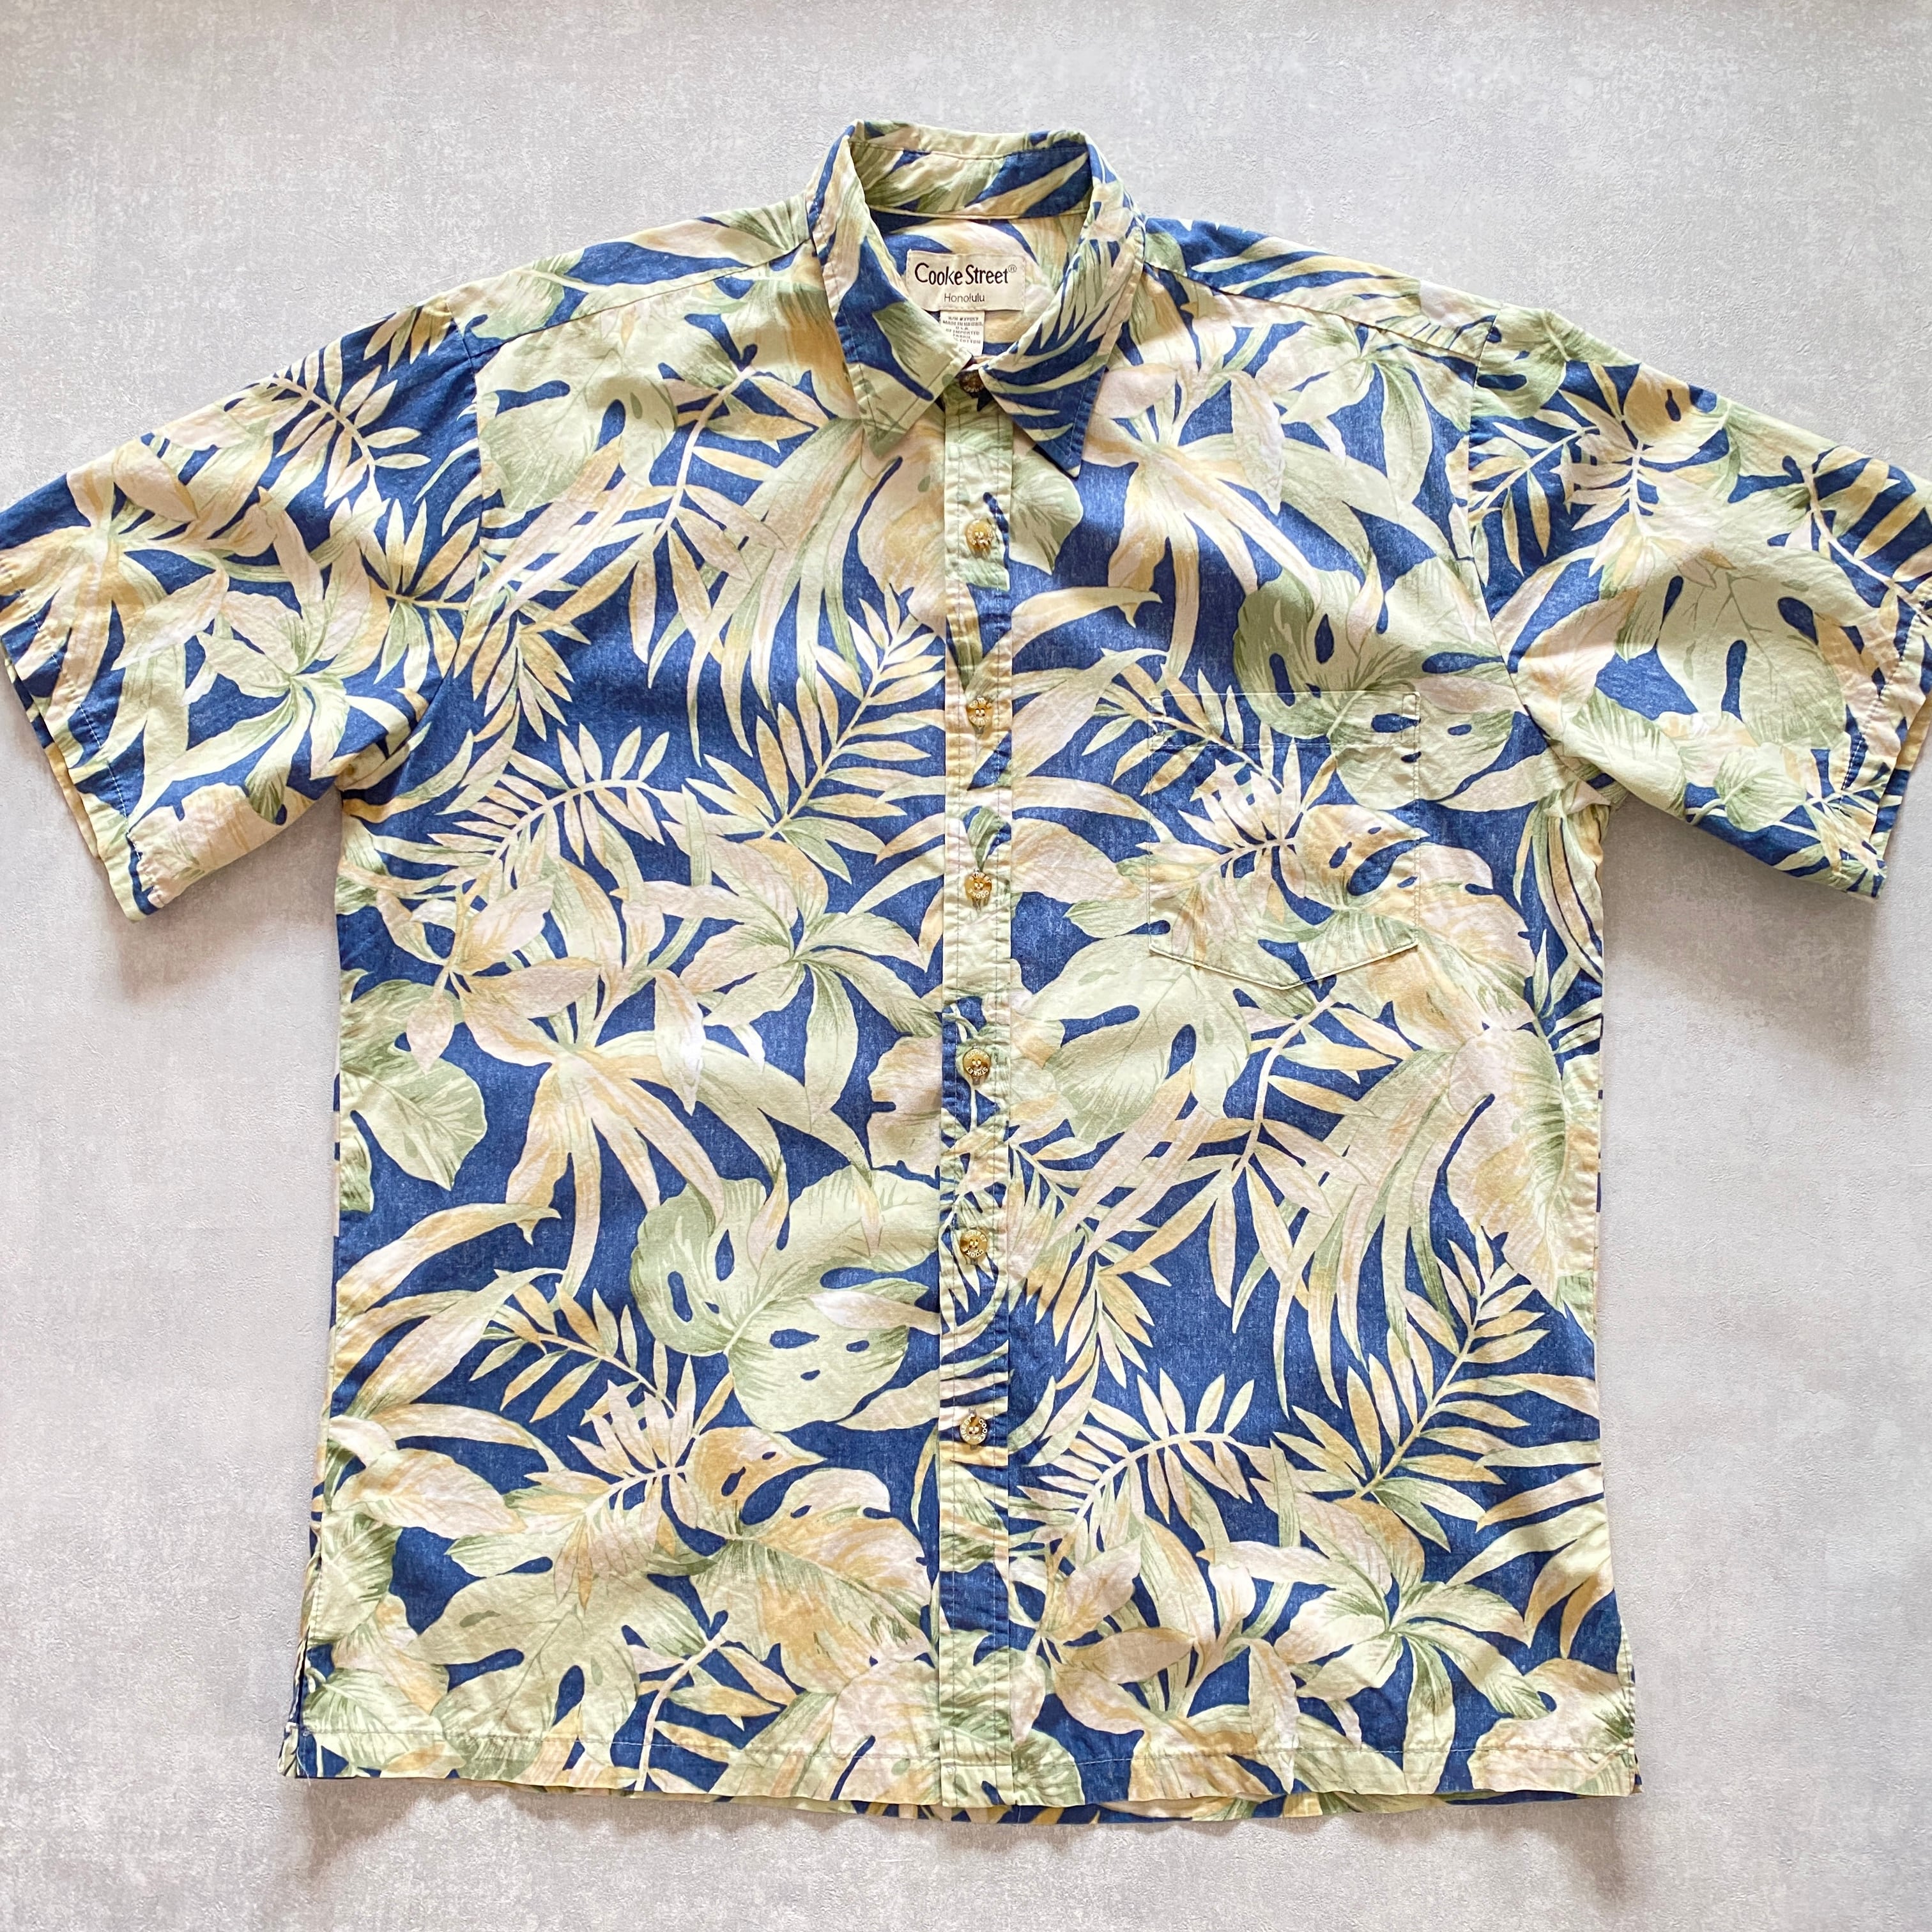 made in HAWAII usa 90s Cooke Street cotton Aloha shirt{ハワイ 